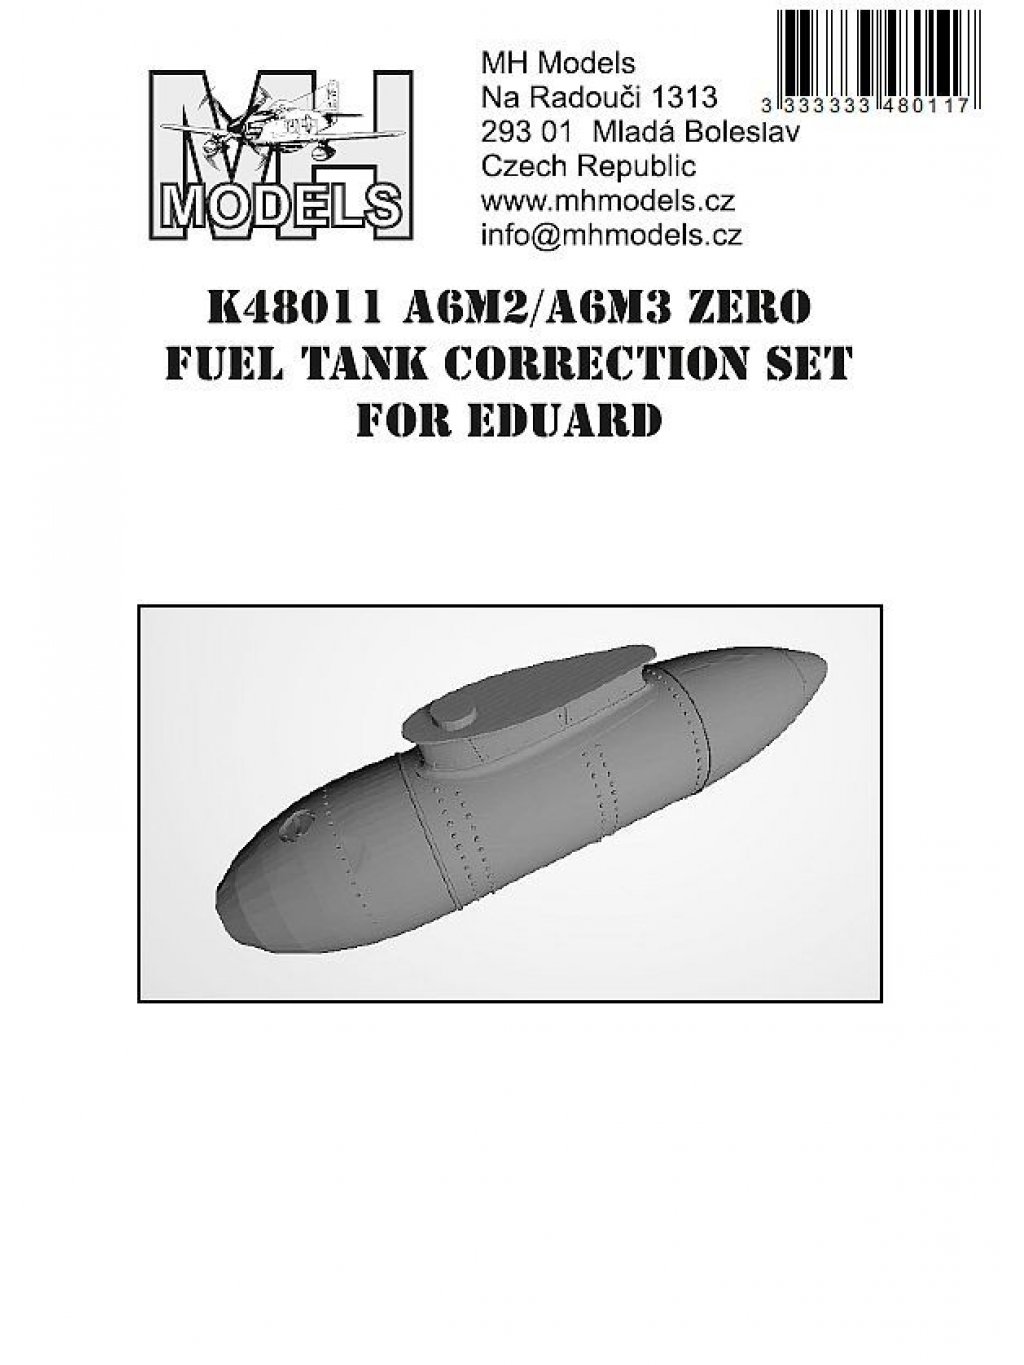 A6M2/A6M3 Zero external fuel tank correction set for Eduard